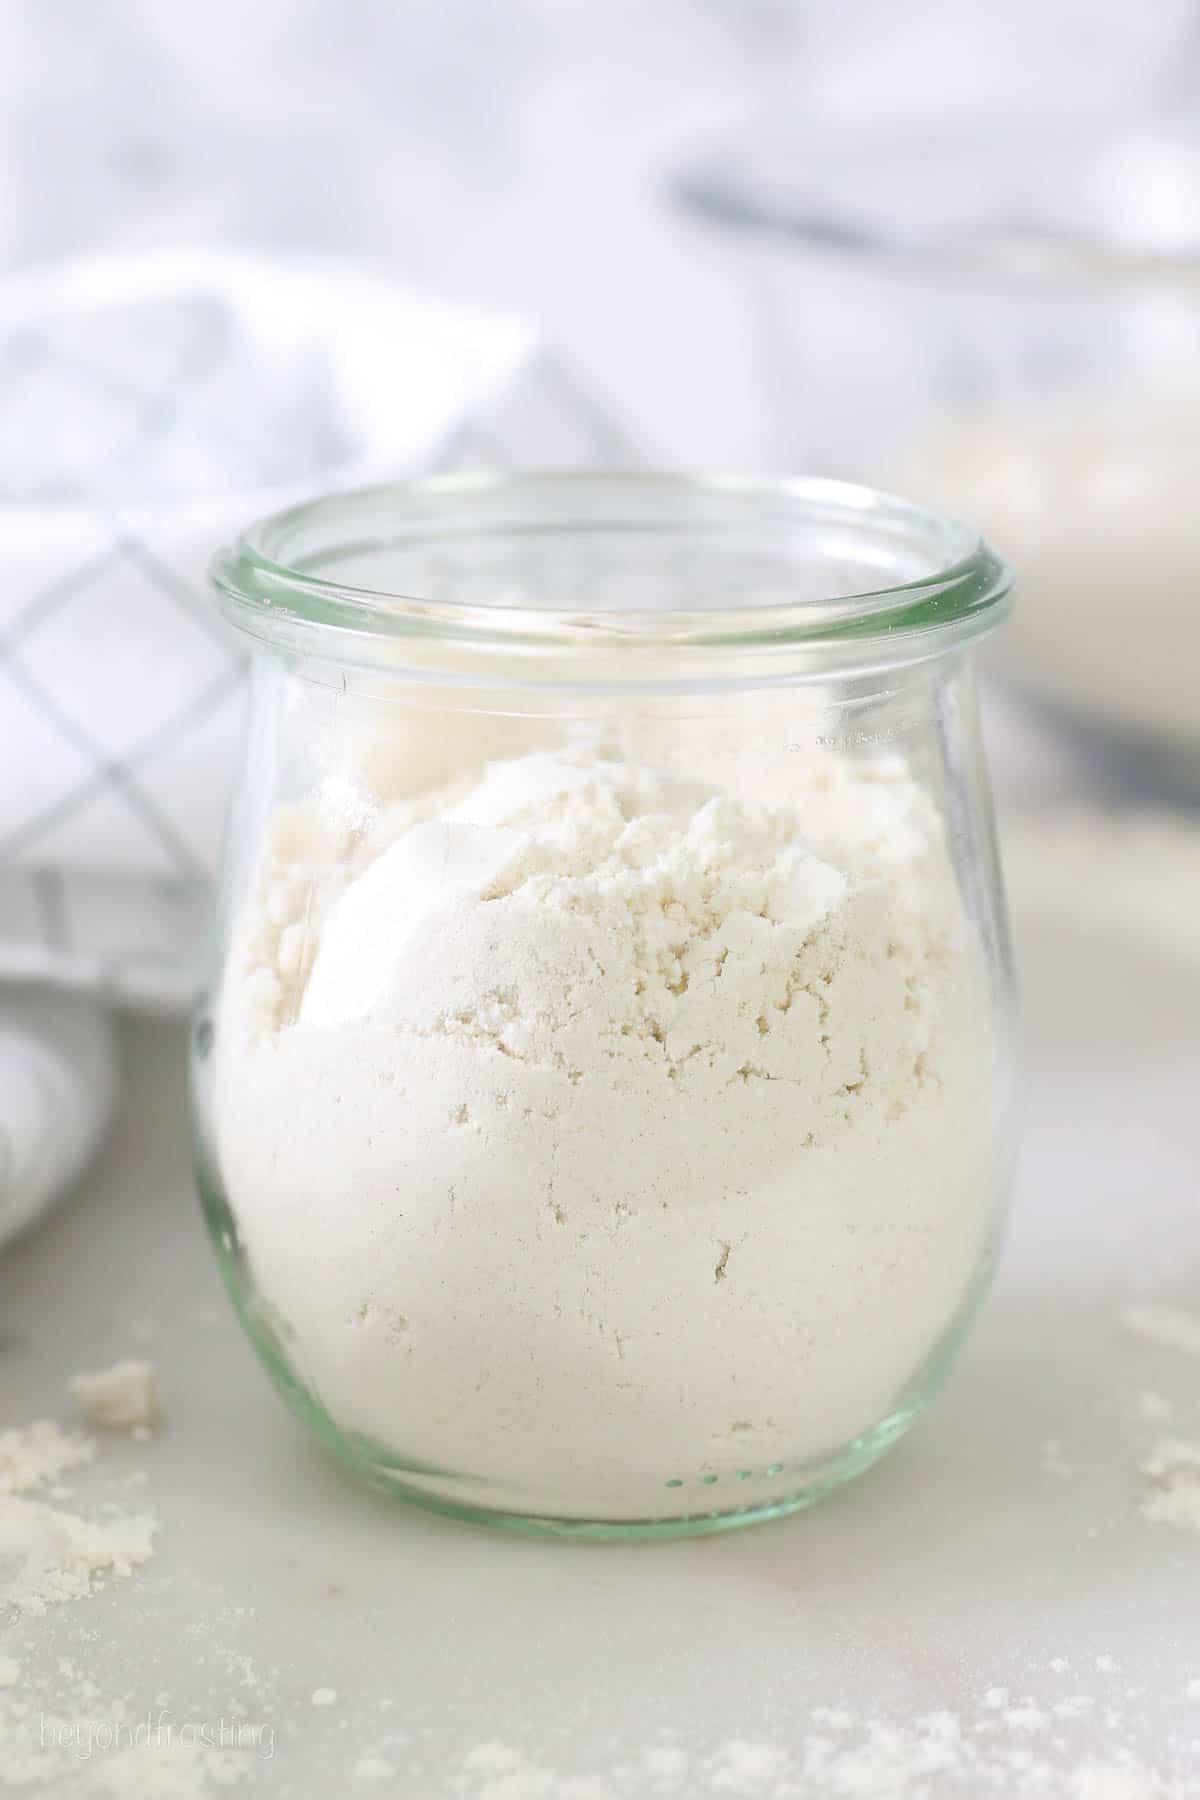 A small glass jar of heat treated flour